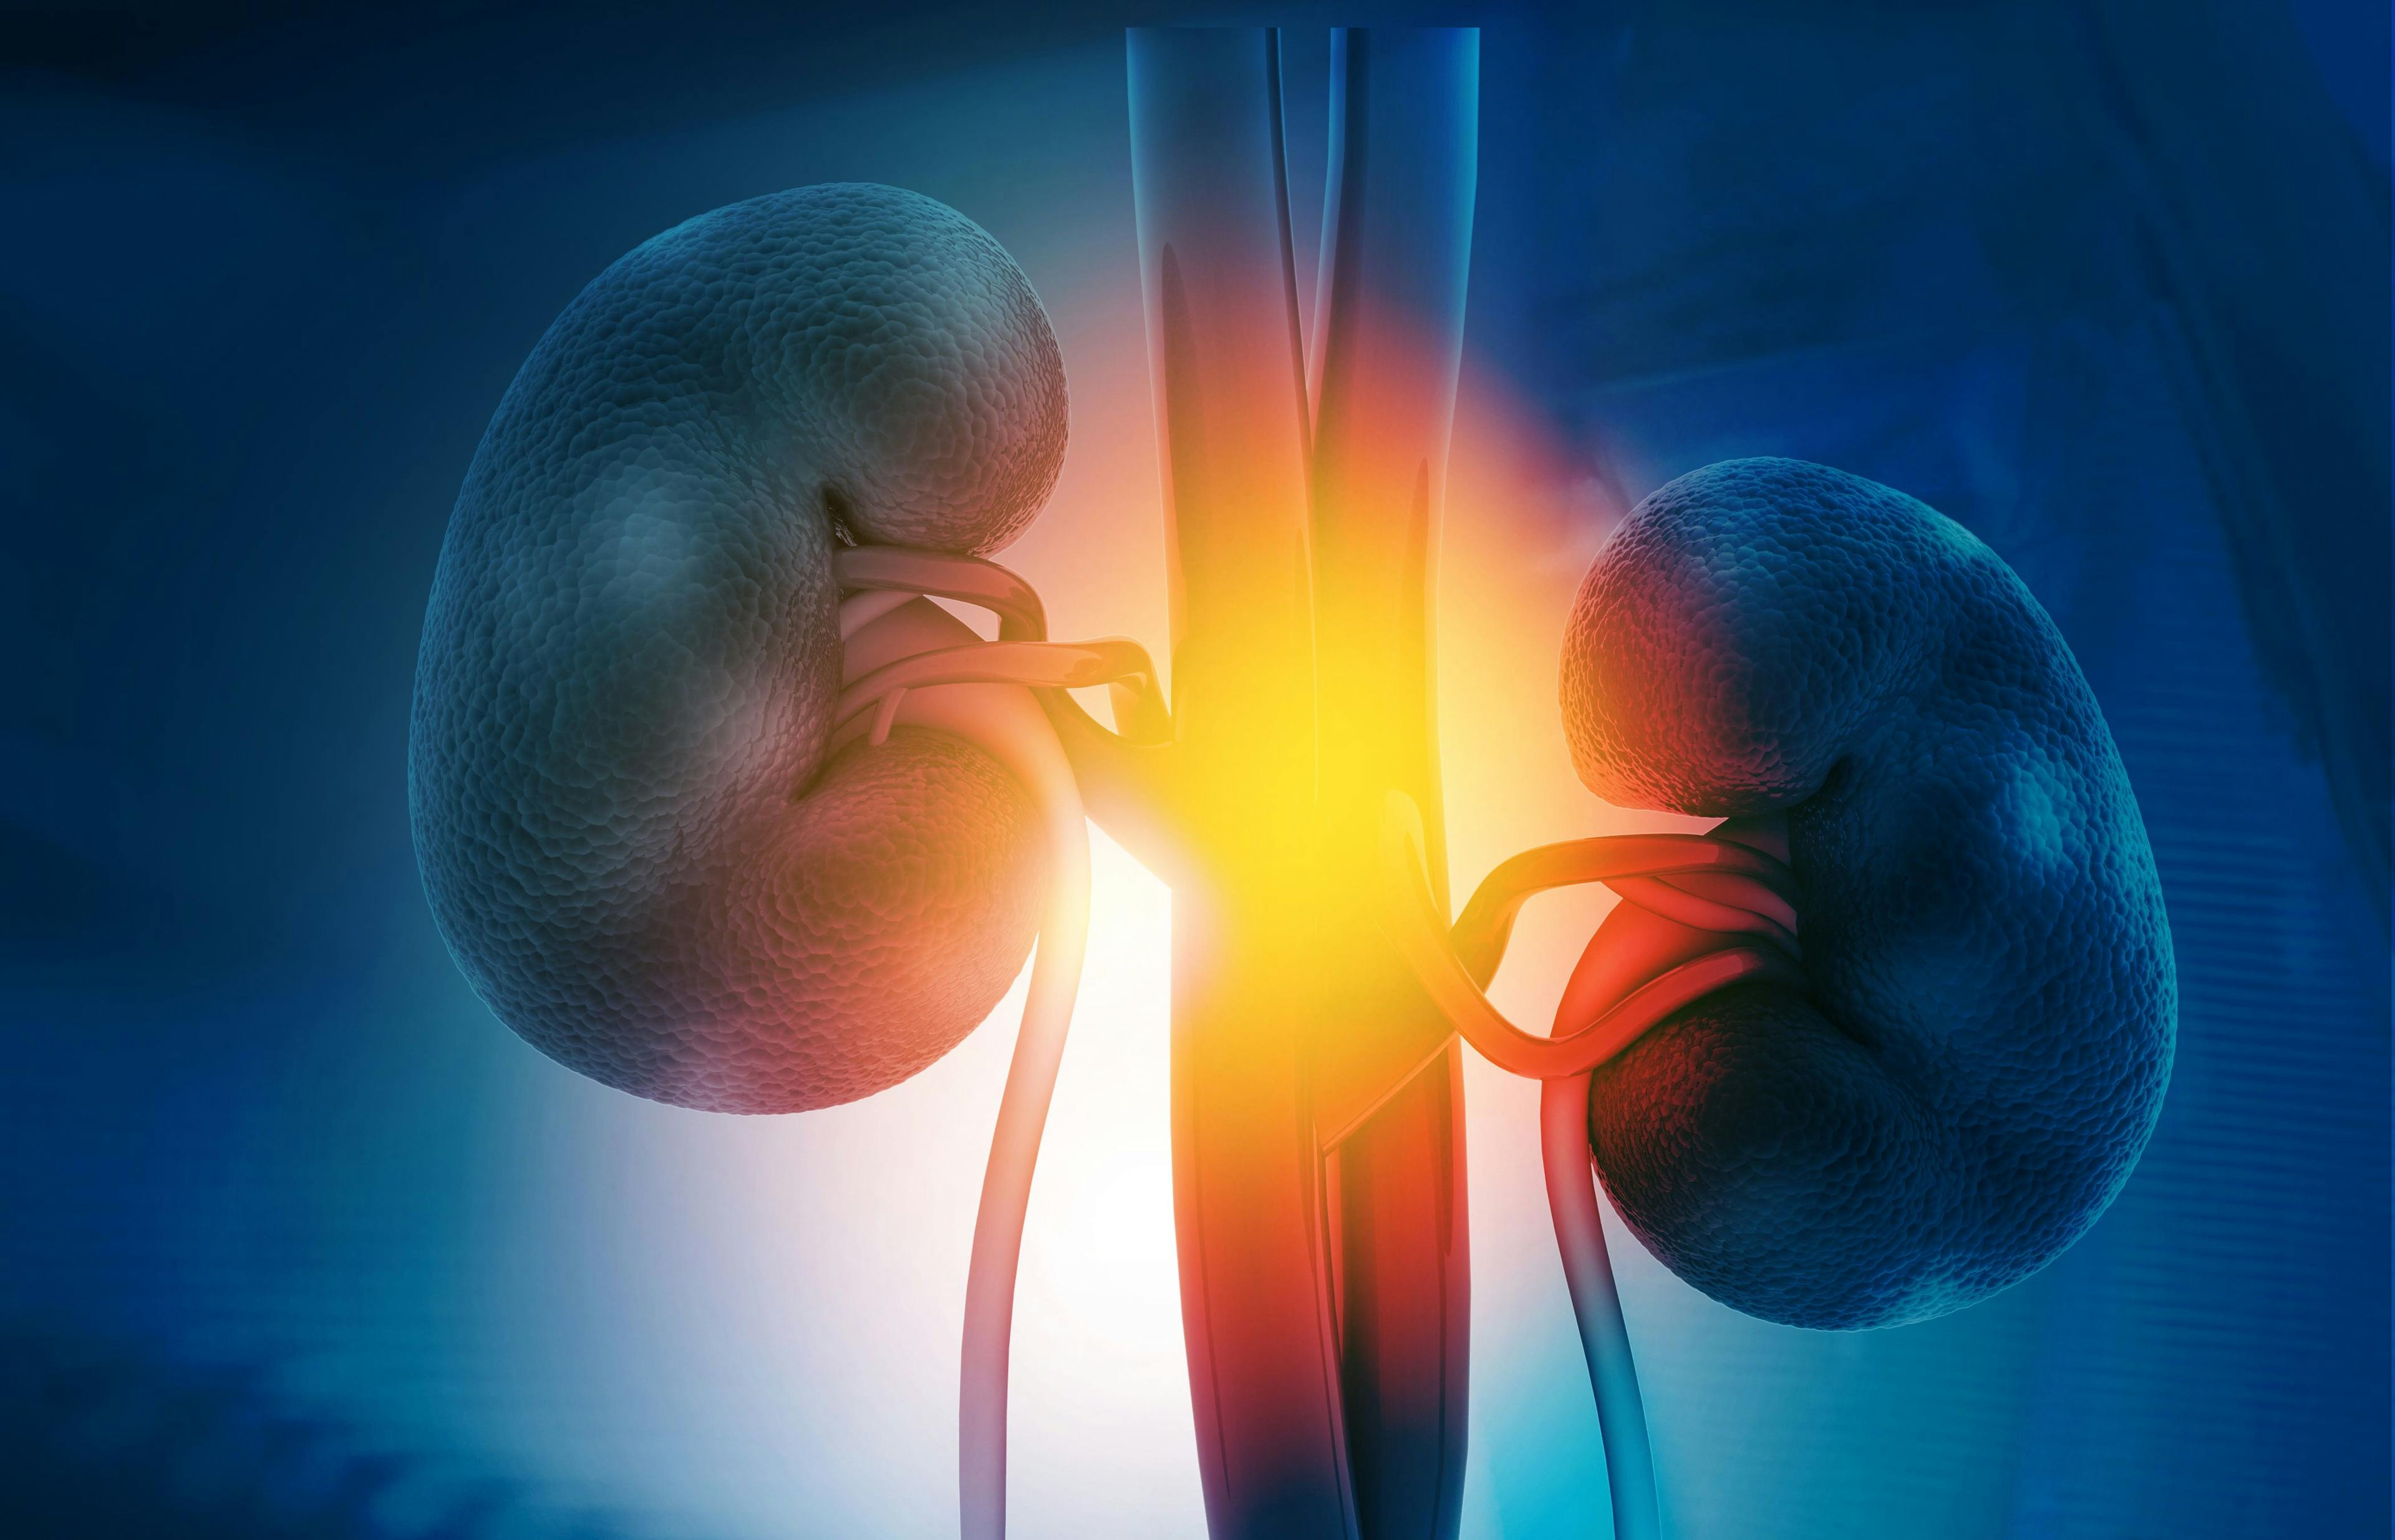 3D rendering of human kidney on science background: © Rasi - stock.adobe.com